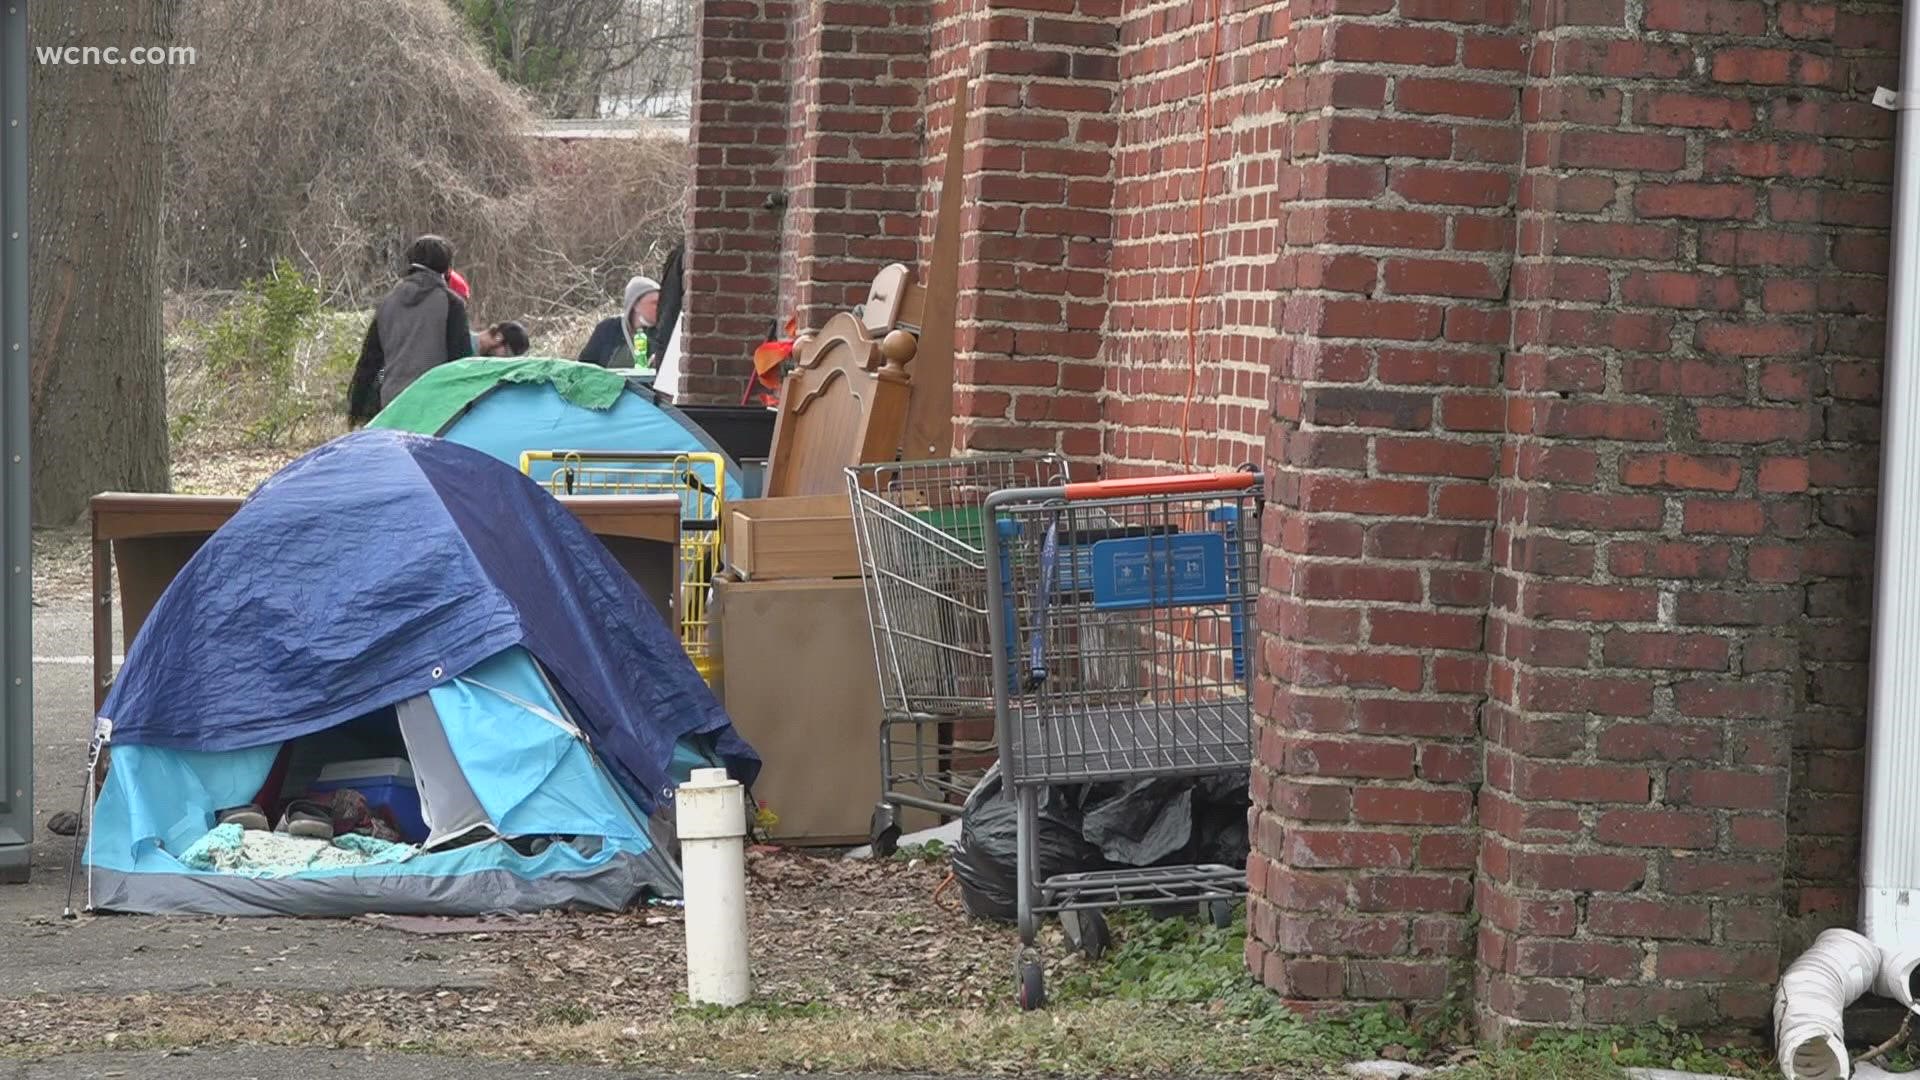 Lexi Wilson breaks down the concerns homeless neighbors have.